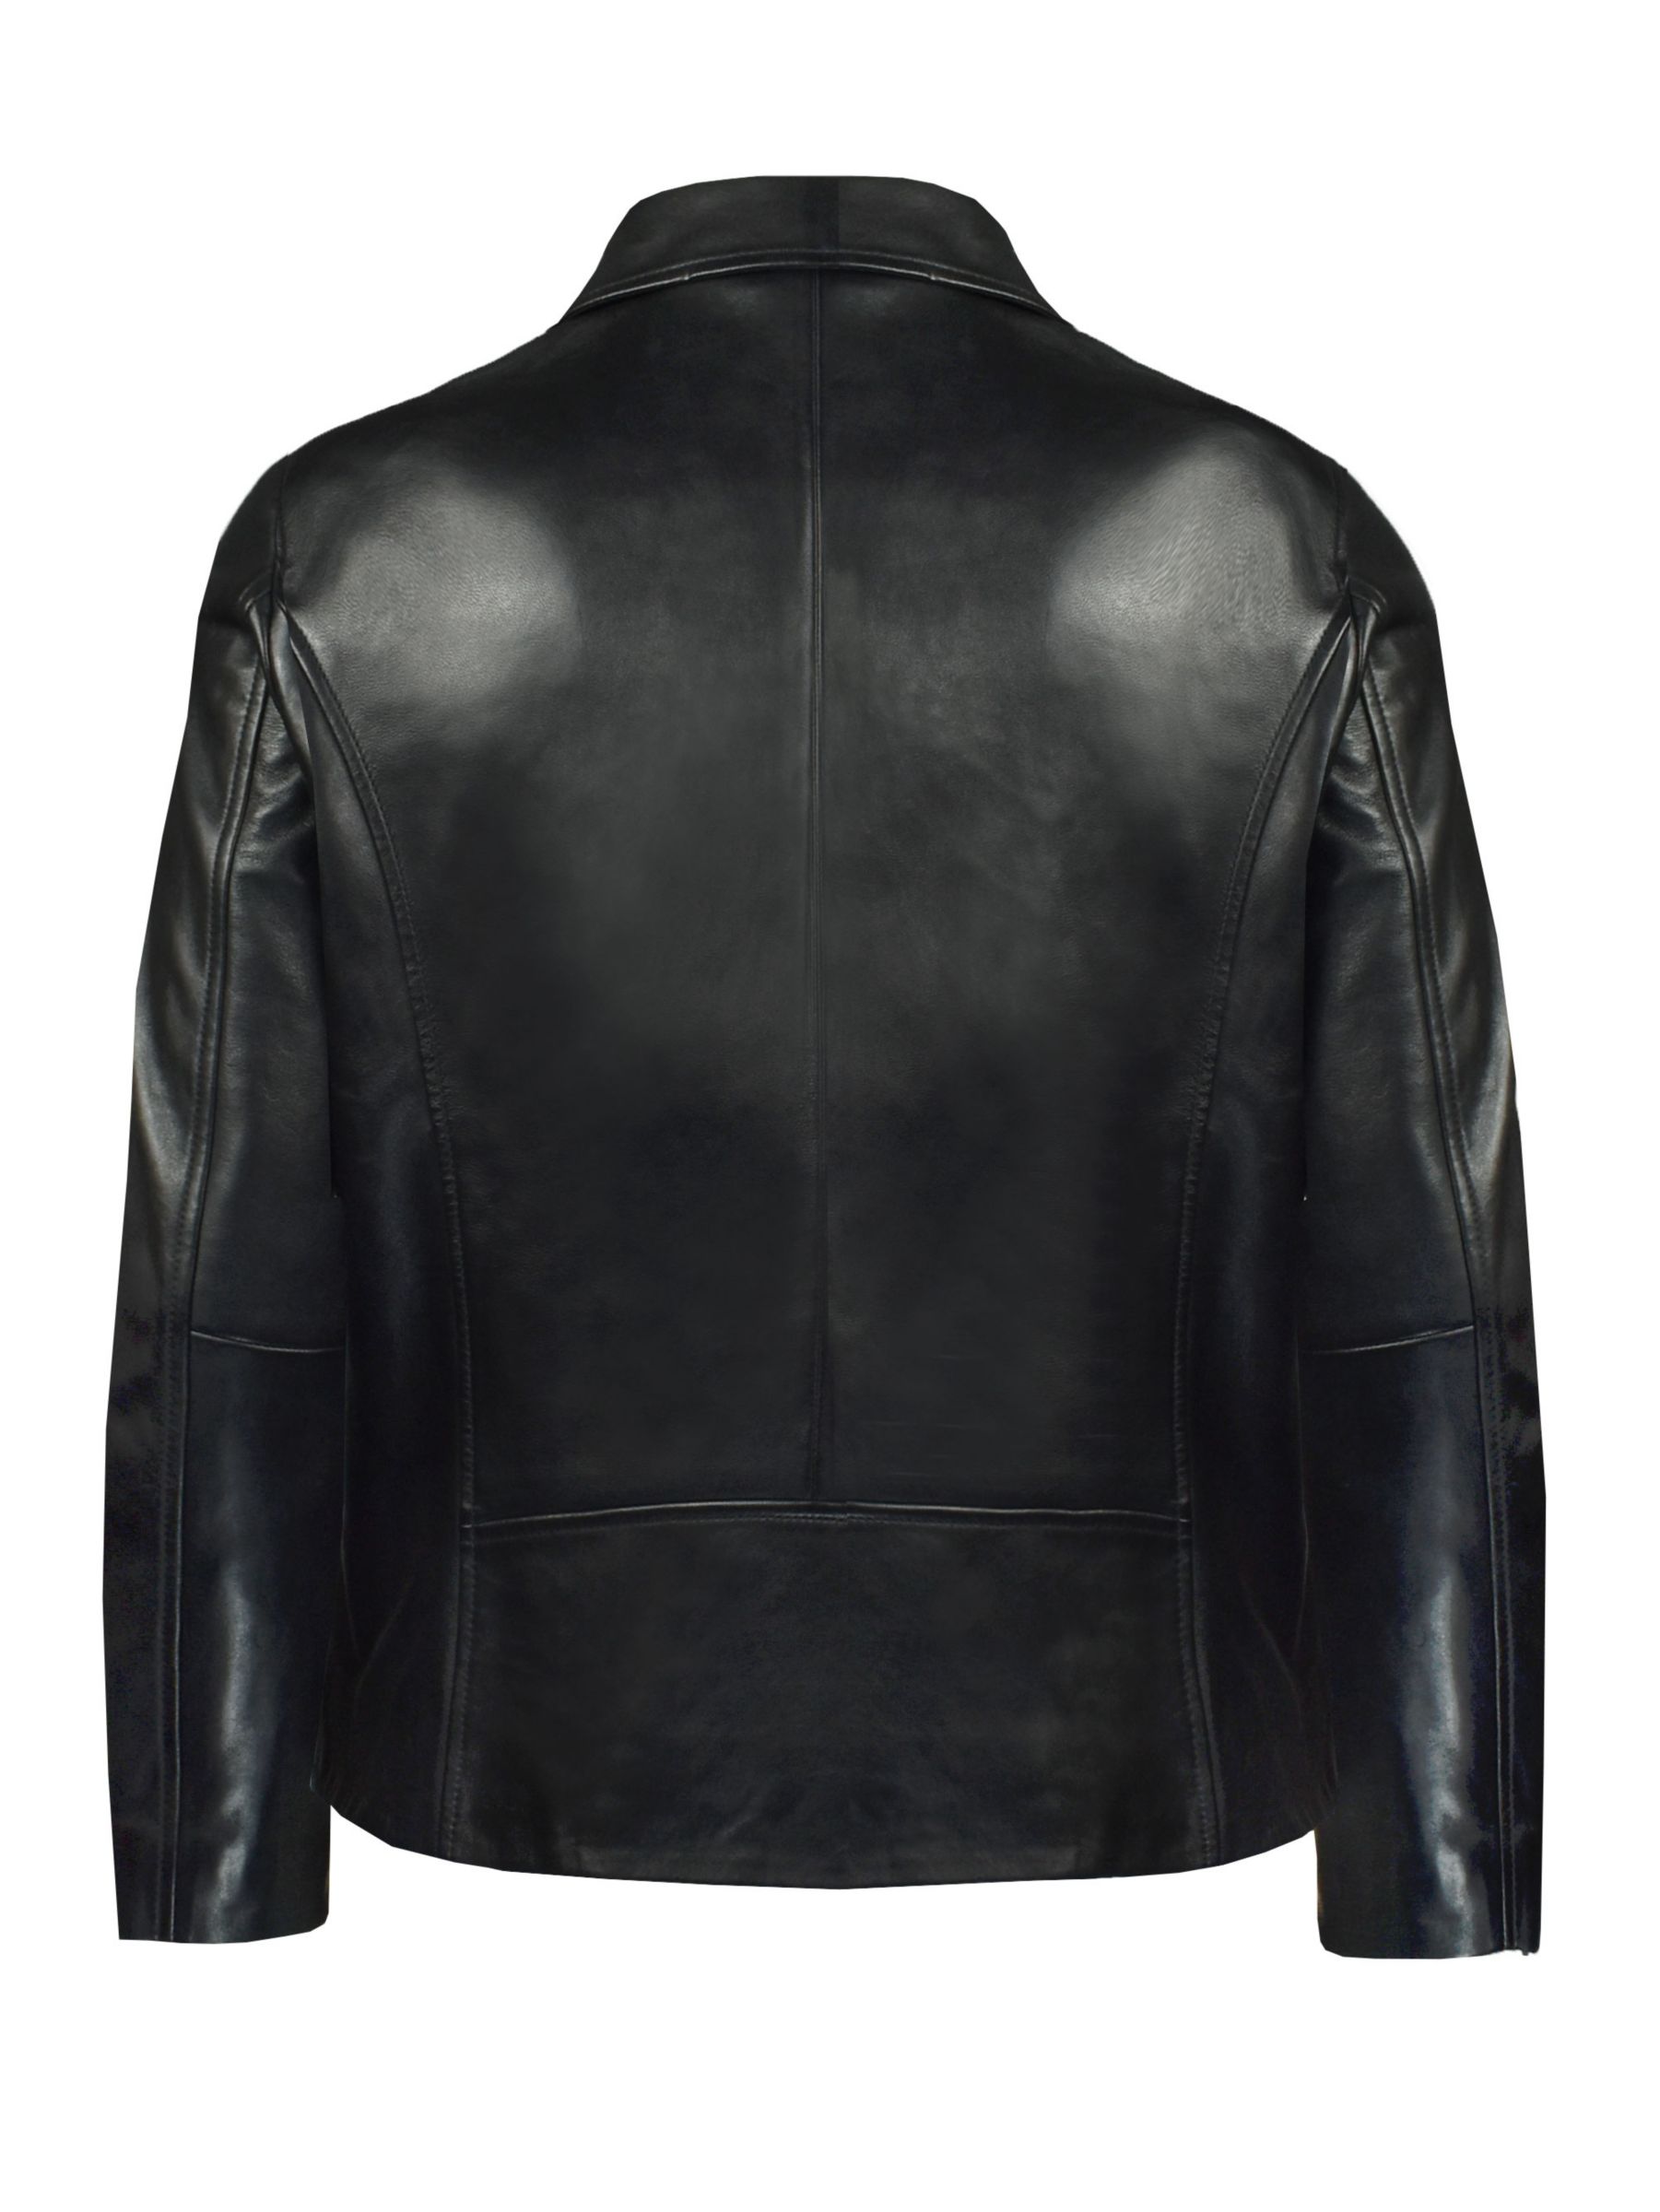 Live Unlimited Curve Leather Jacket, Black at John Lewis & Partners